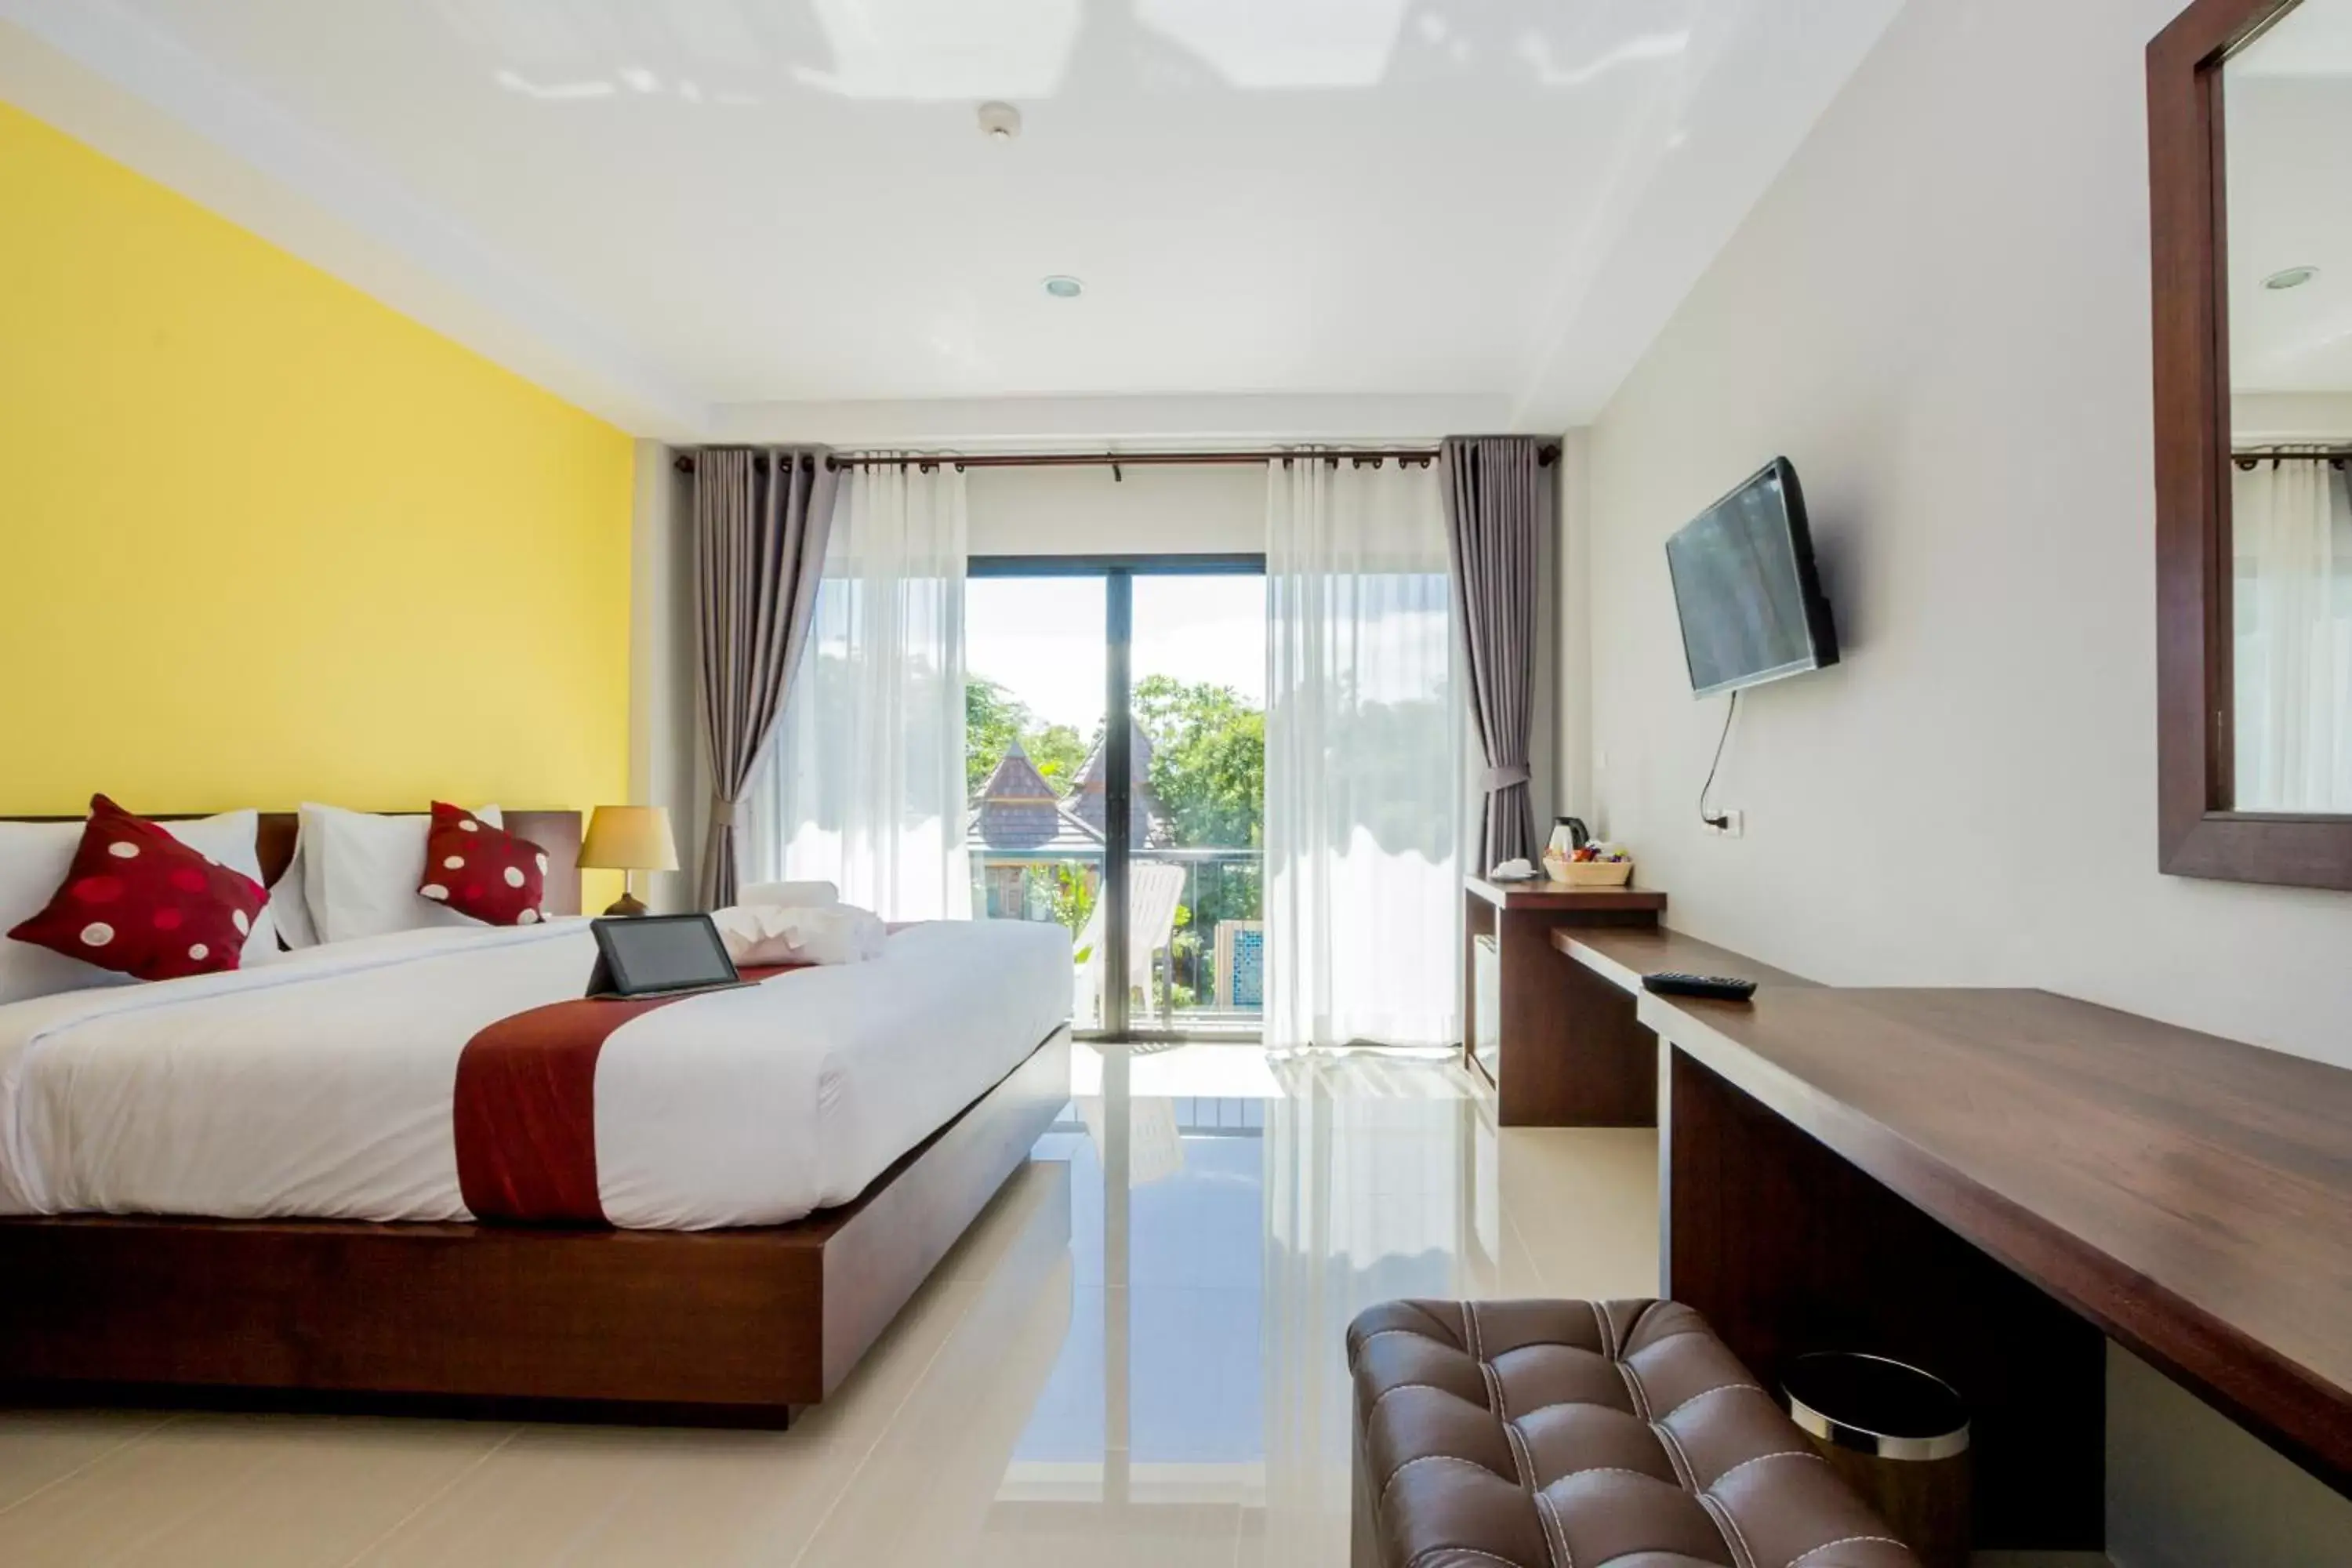 Bed, Room Photo in Andaman Pearl Resort